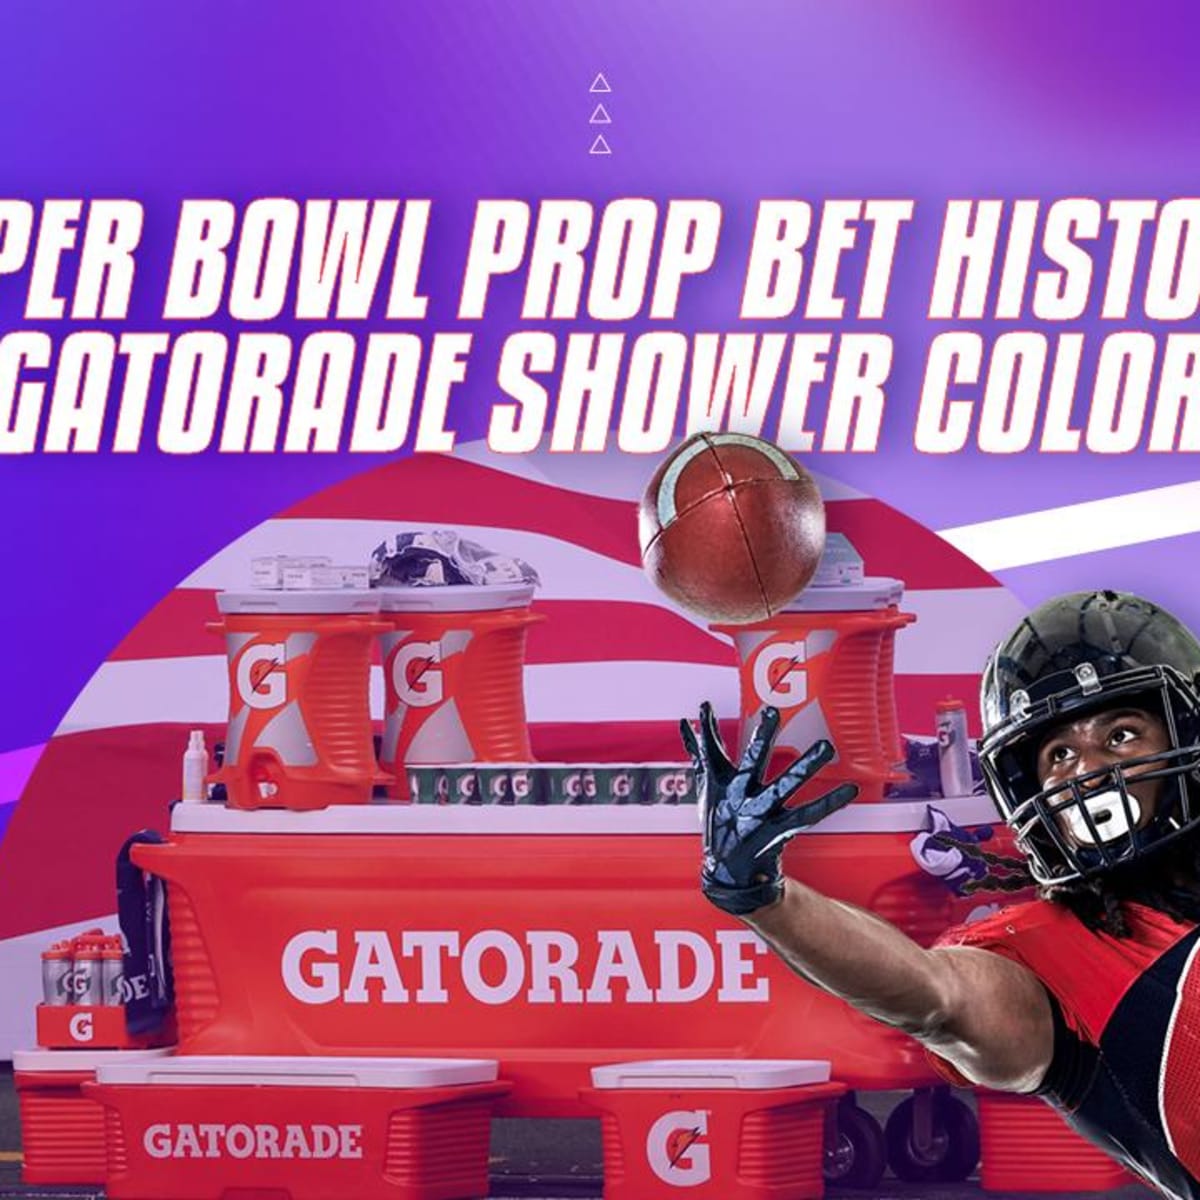 Super Bowl Gatorade Bath Prop Bet: What Color Will The Liquid Be?